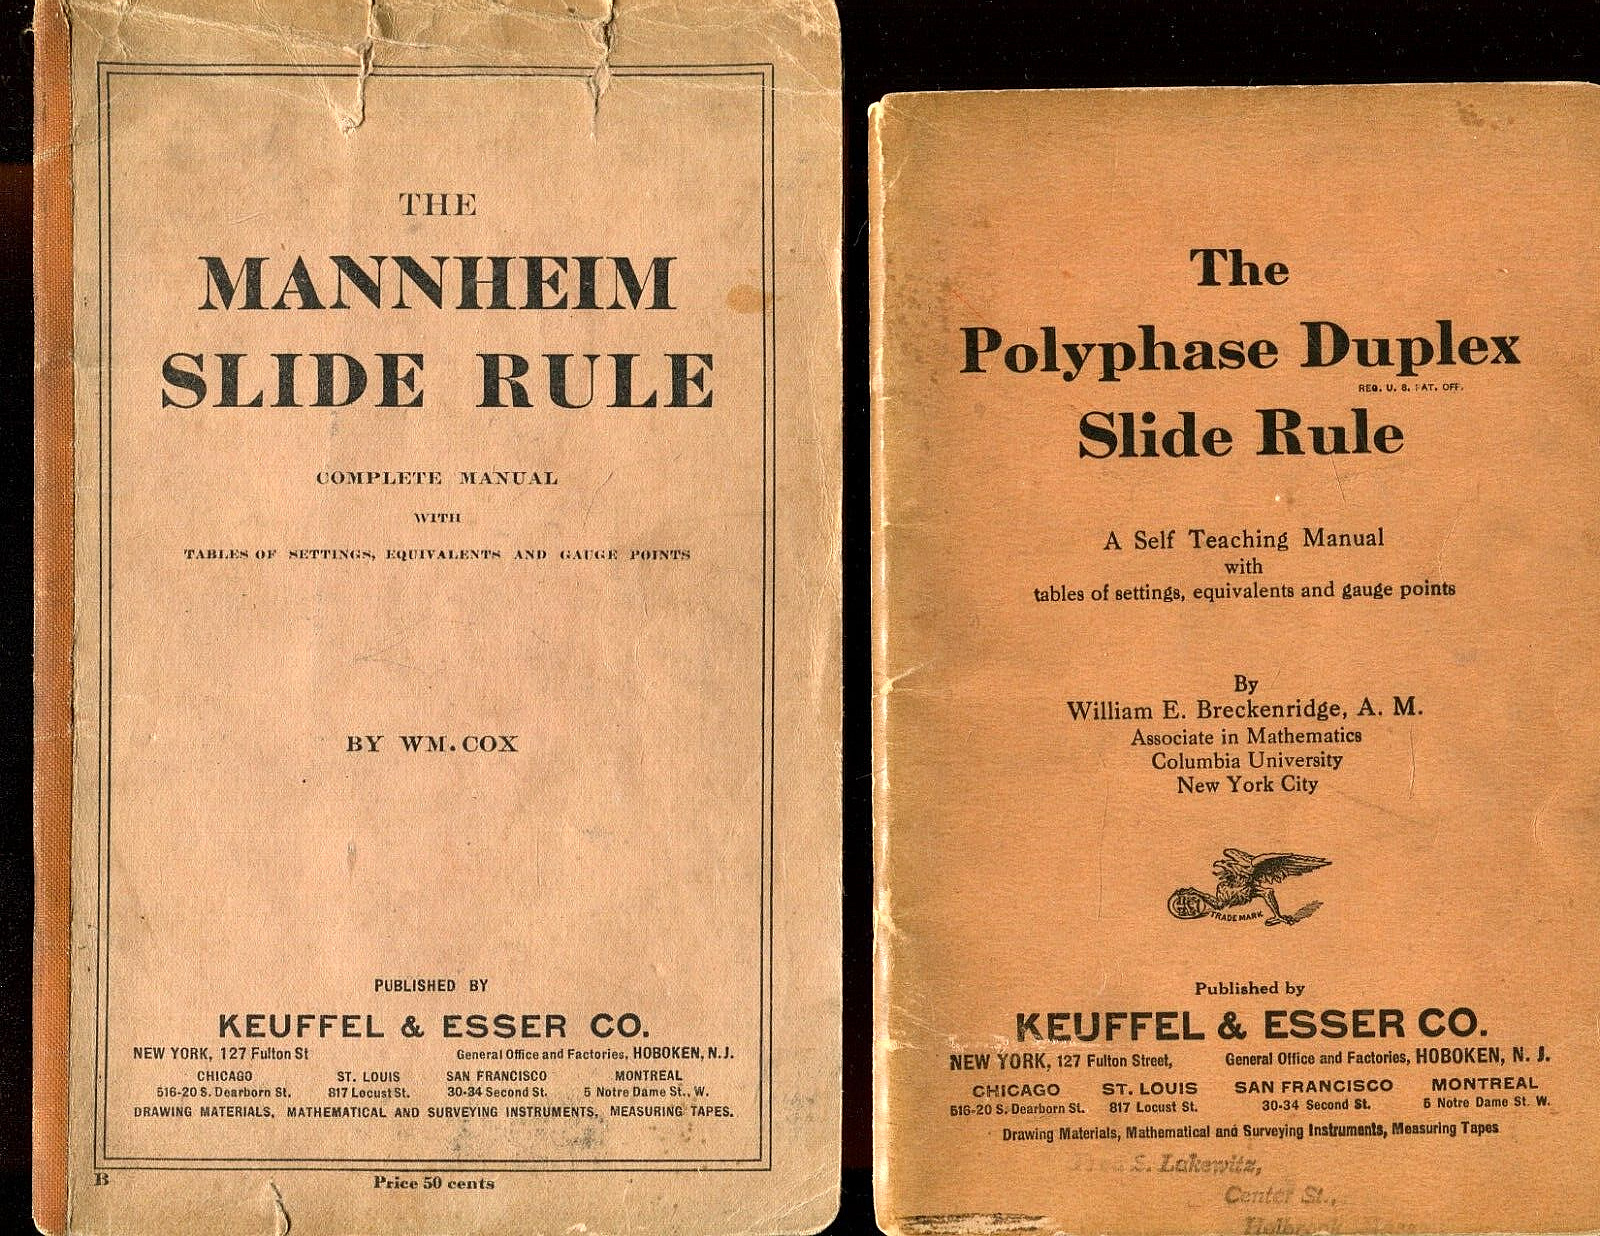 THE POLYPHASE DUPLEX SLIDE RULE & MANNHEIM SLIDE RULE BOOKLETS